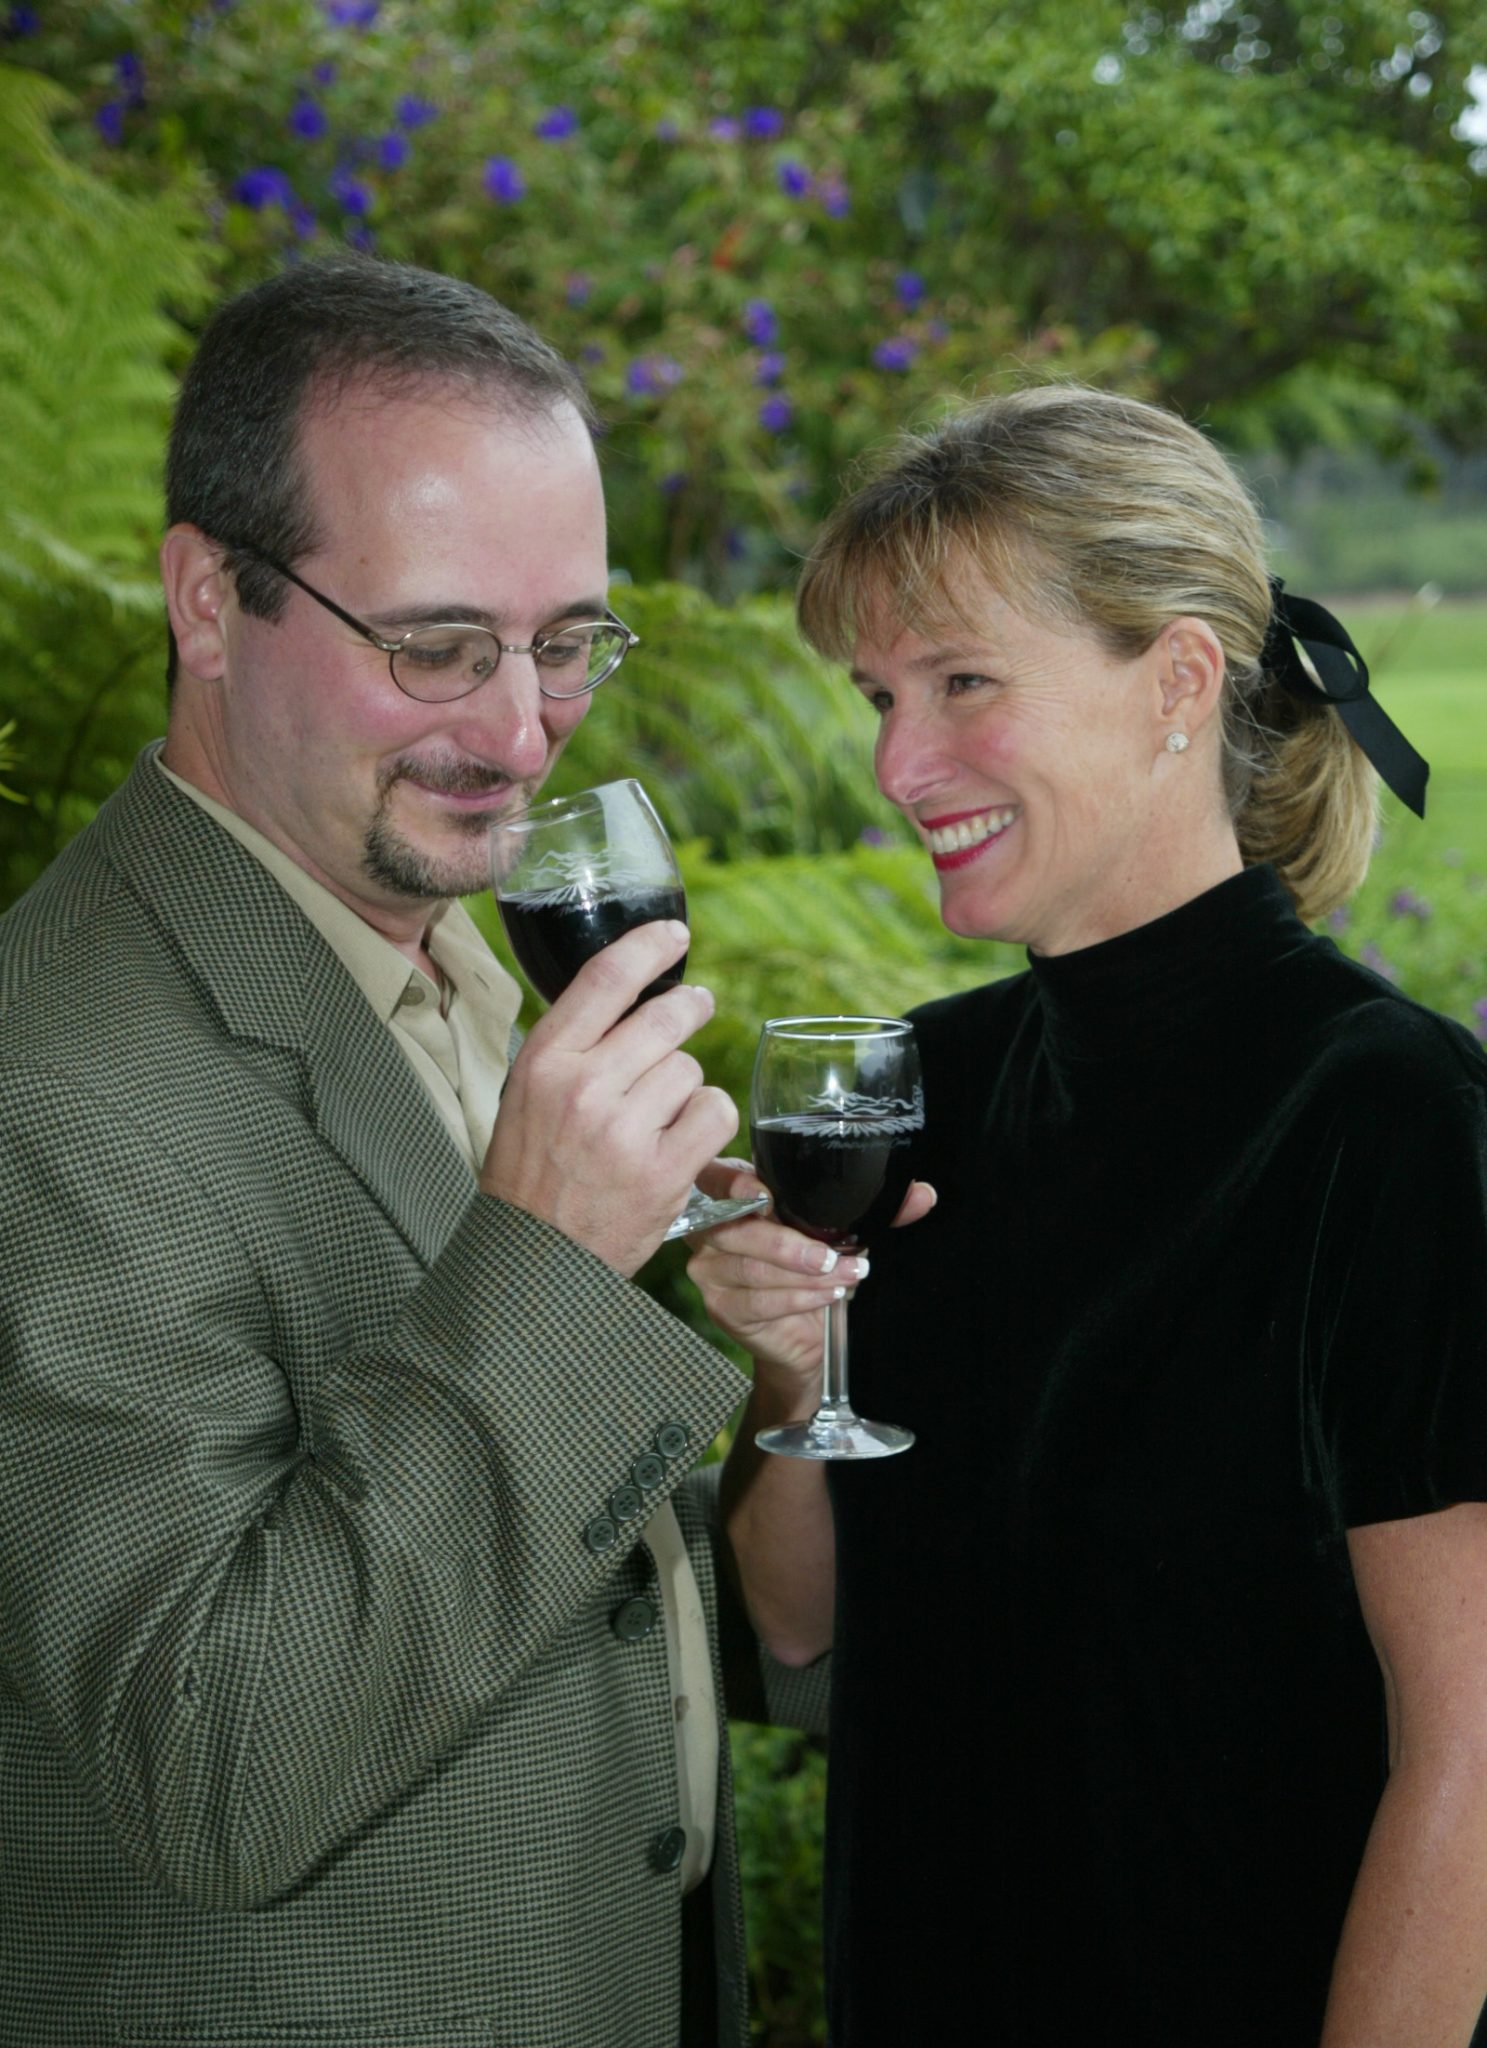 Man and woman tasting wine